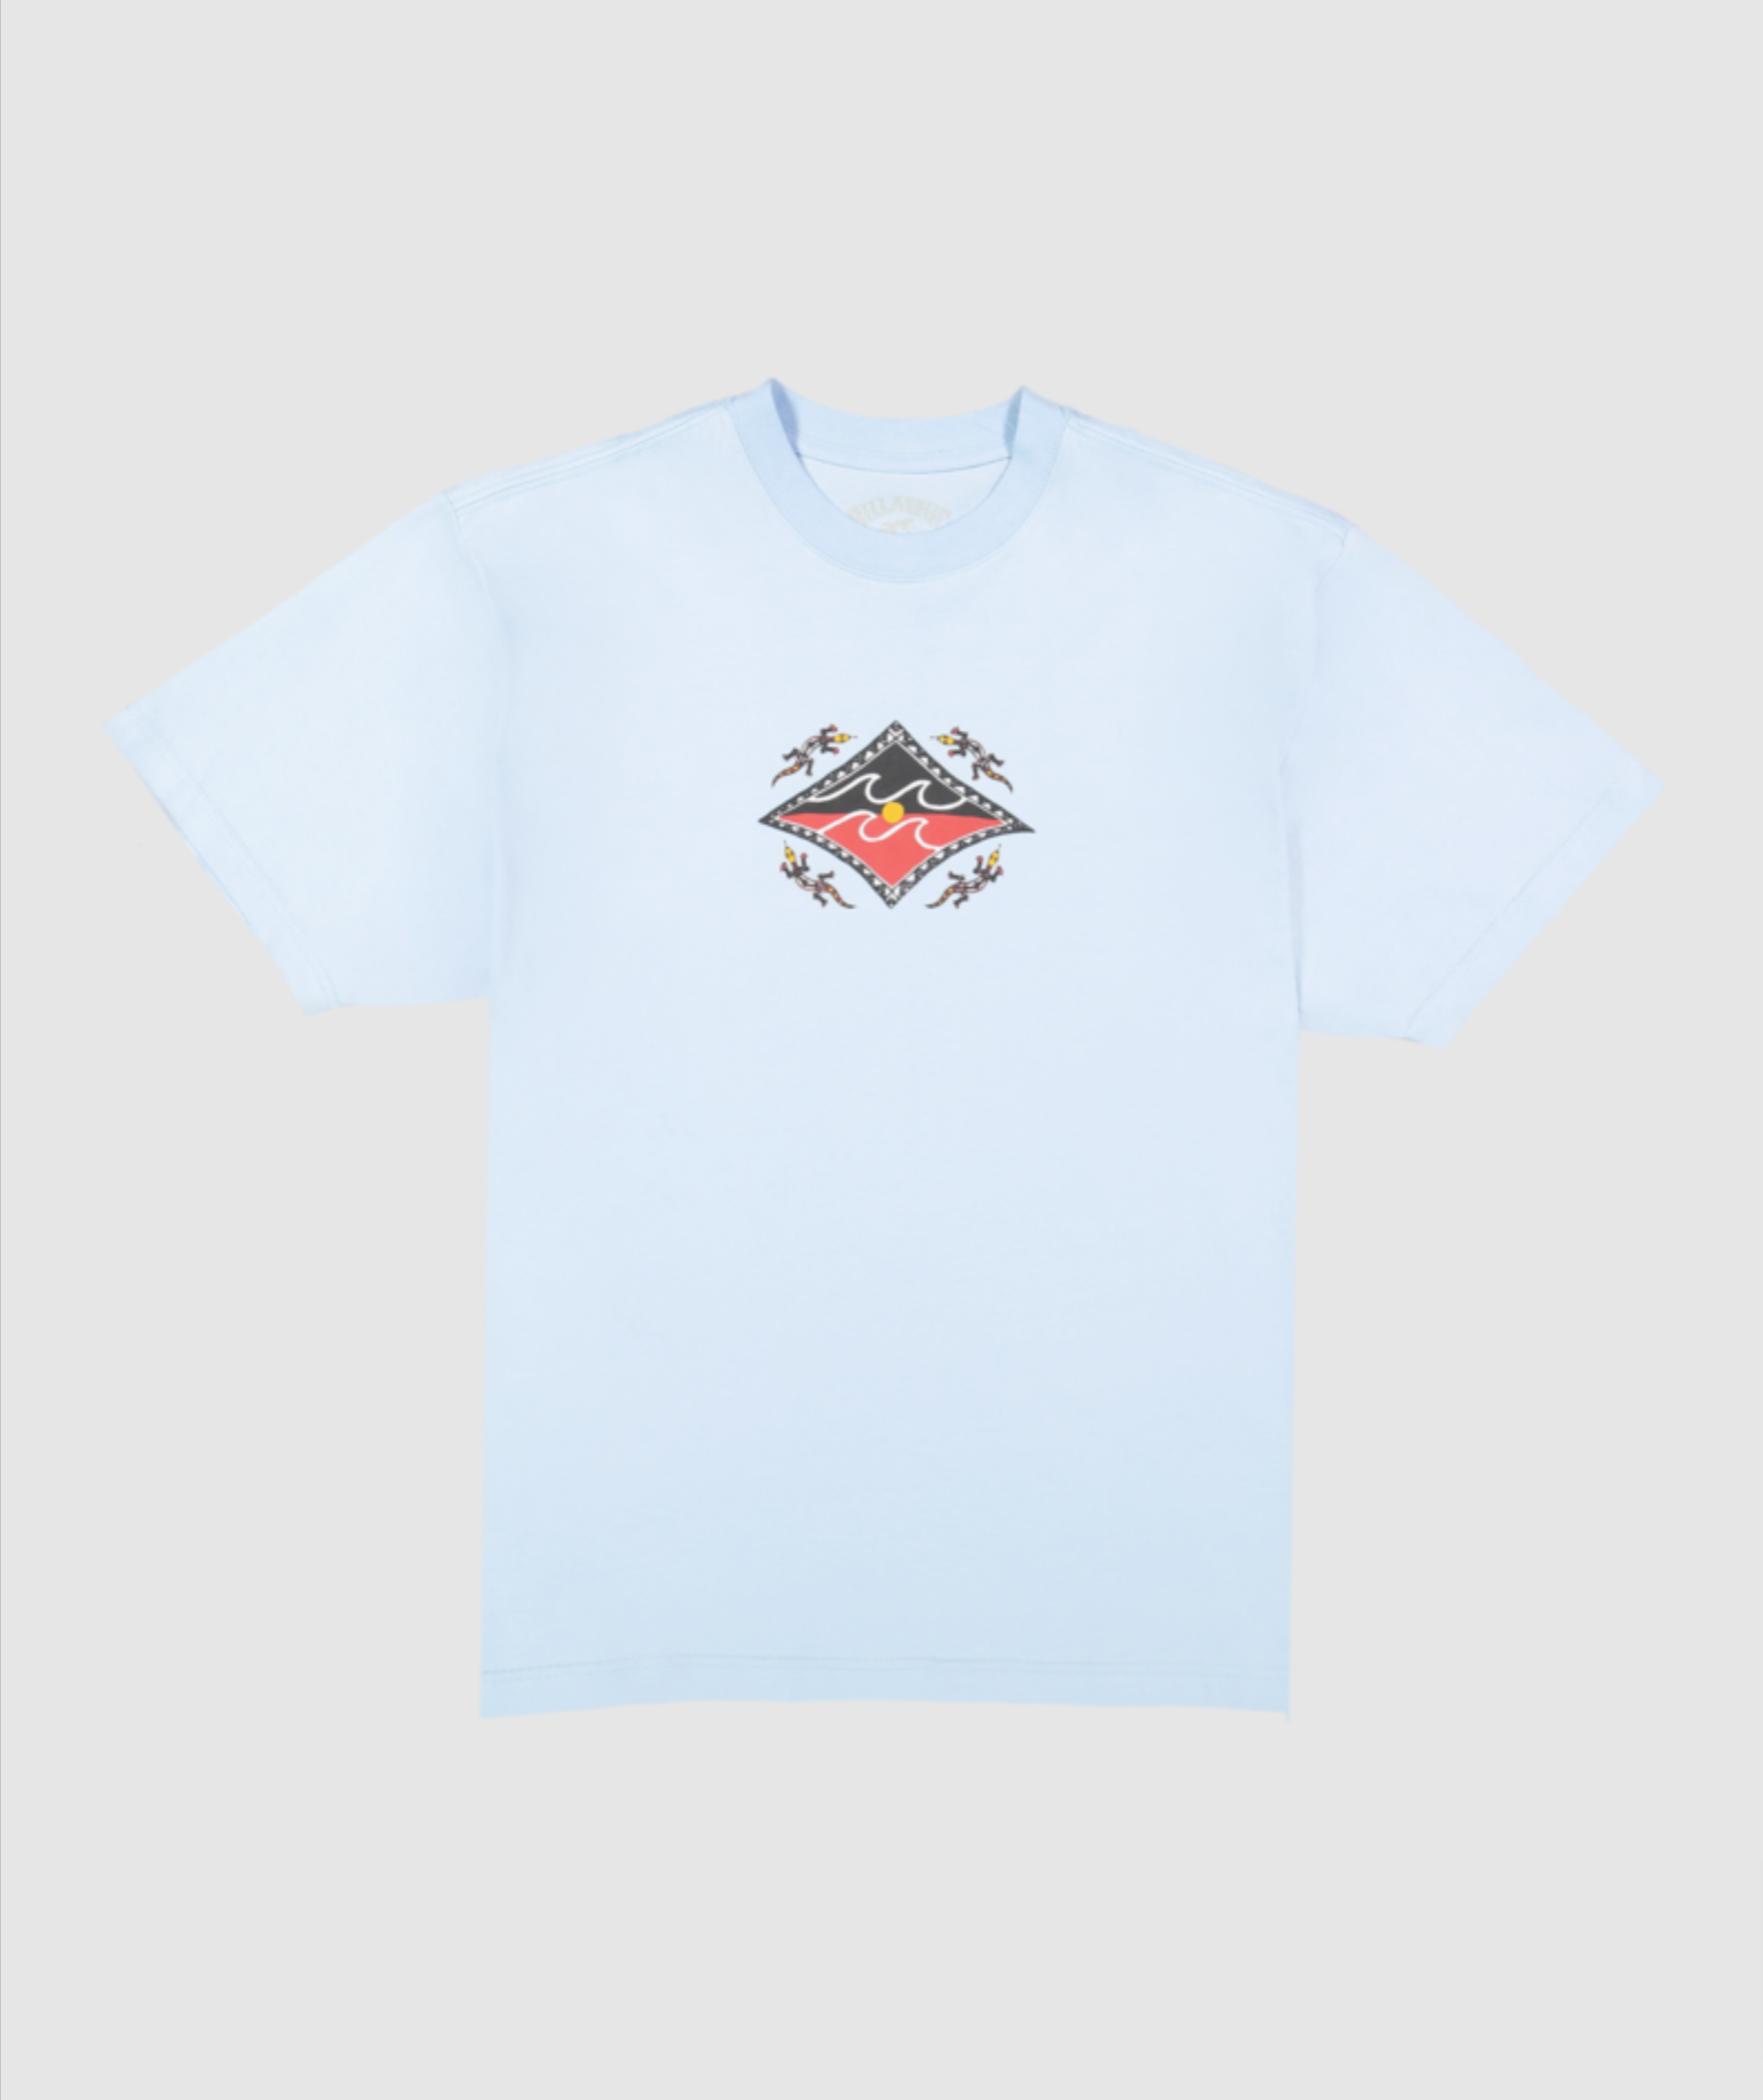 Otis Diamond SS T-Shirt